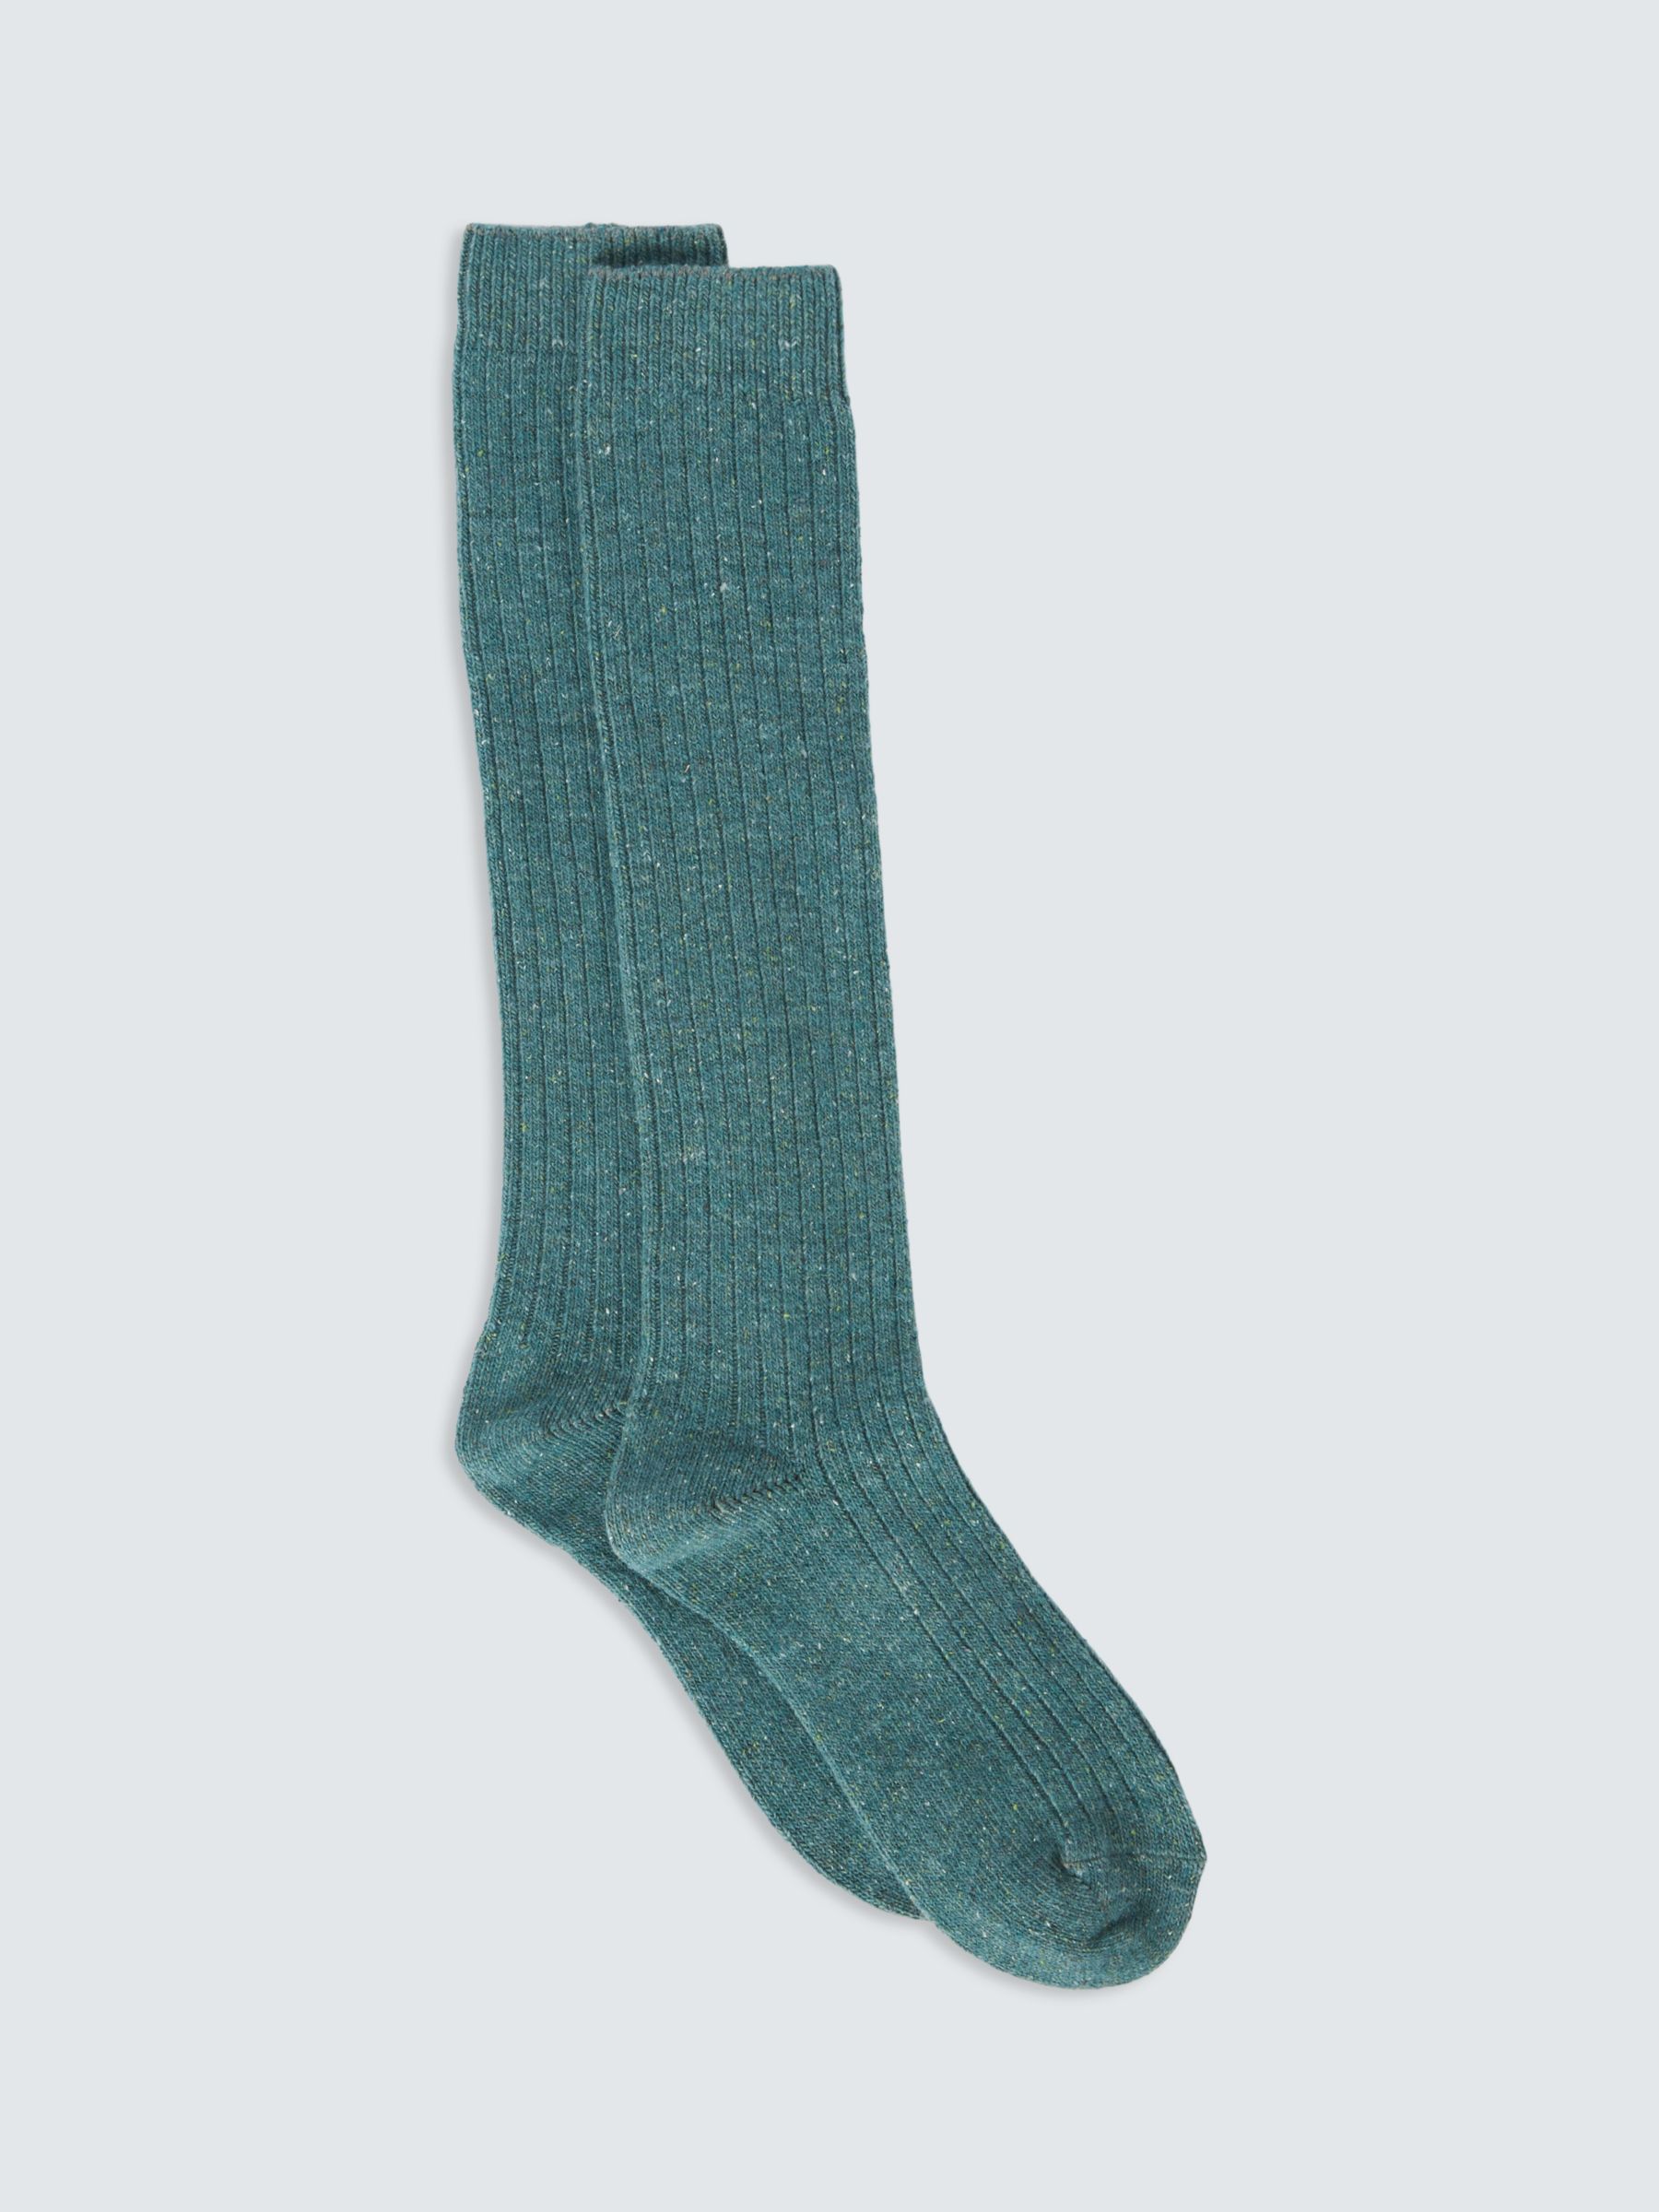 Dear Denier Matilde Knee High Ribbed Socks, £18.00